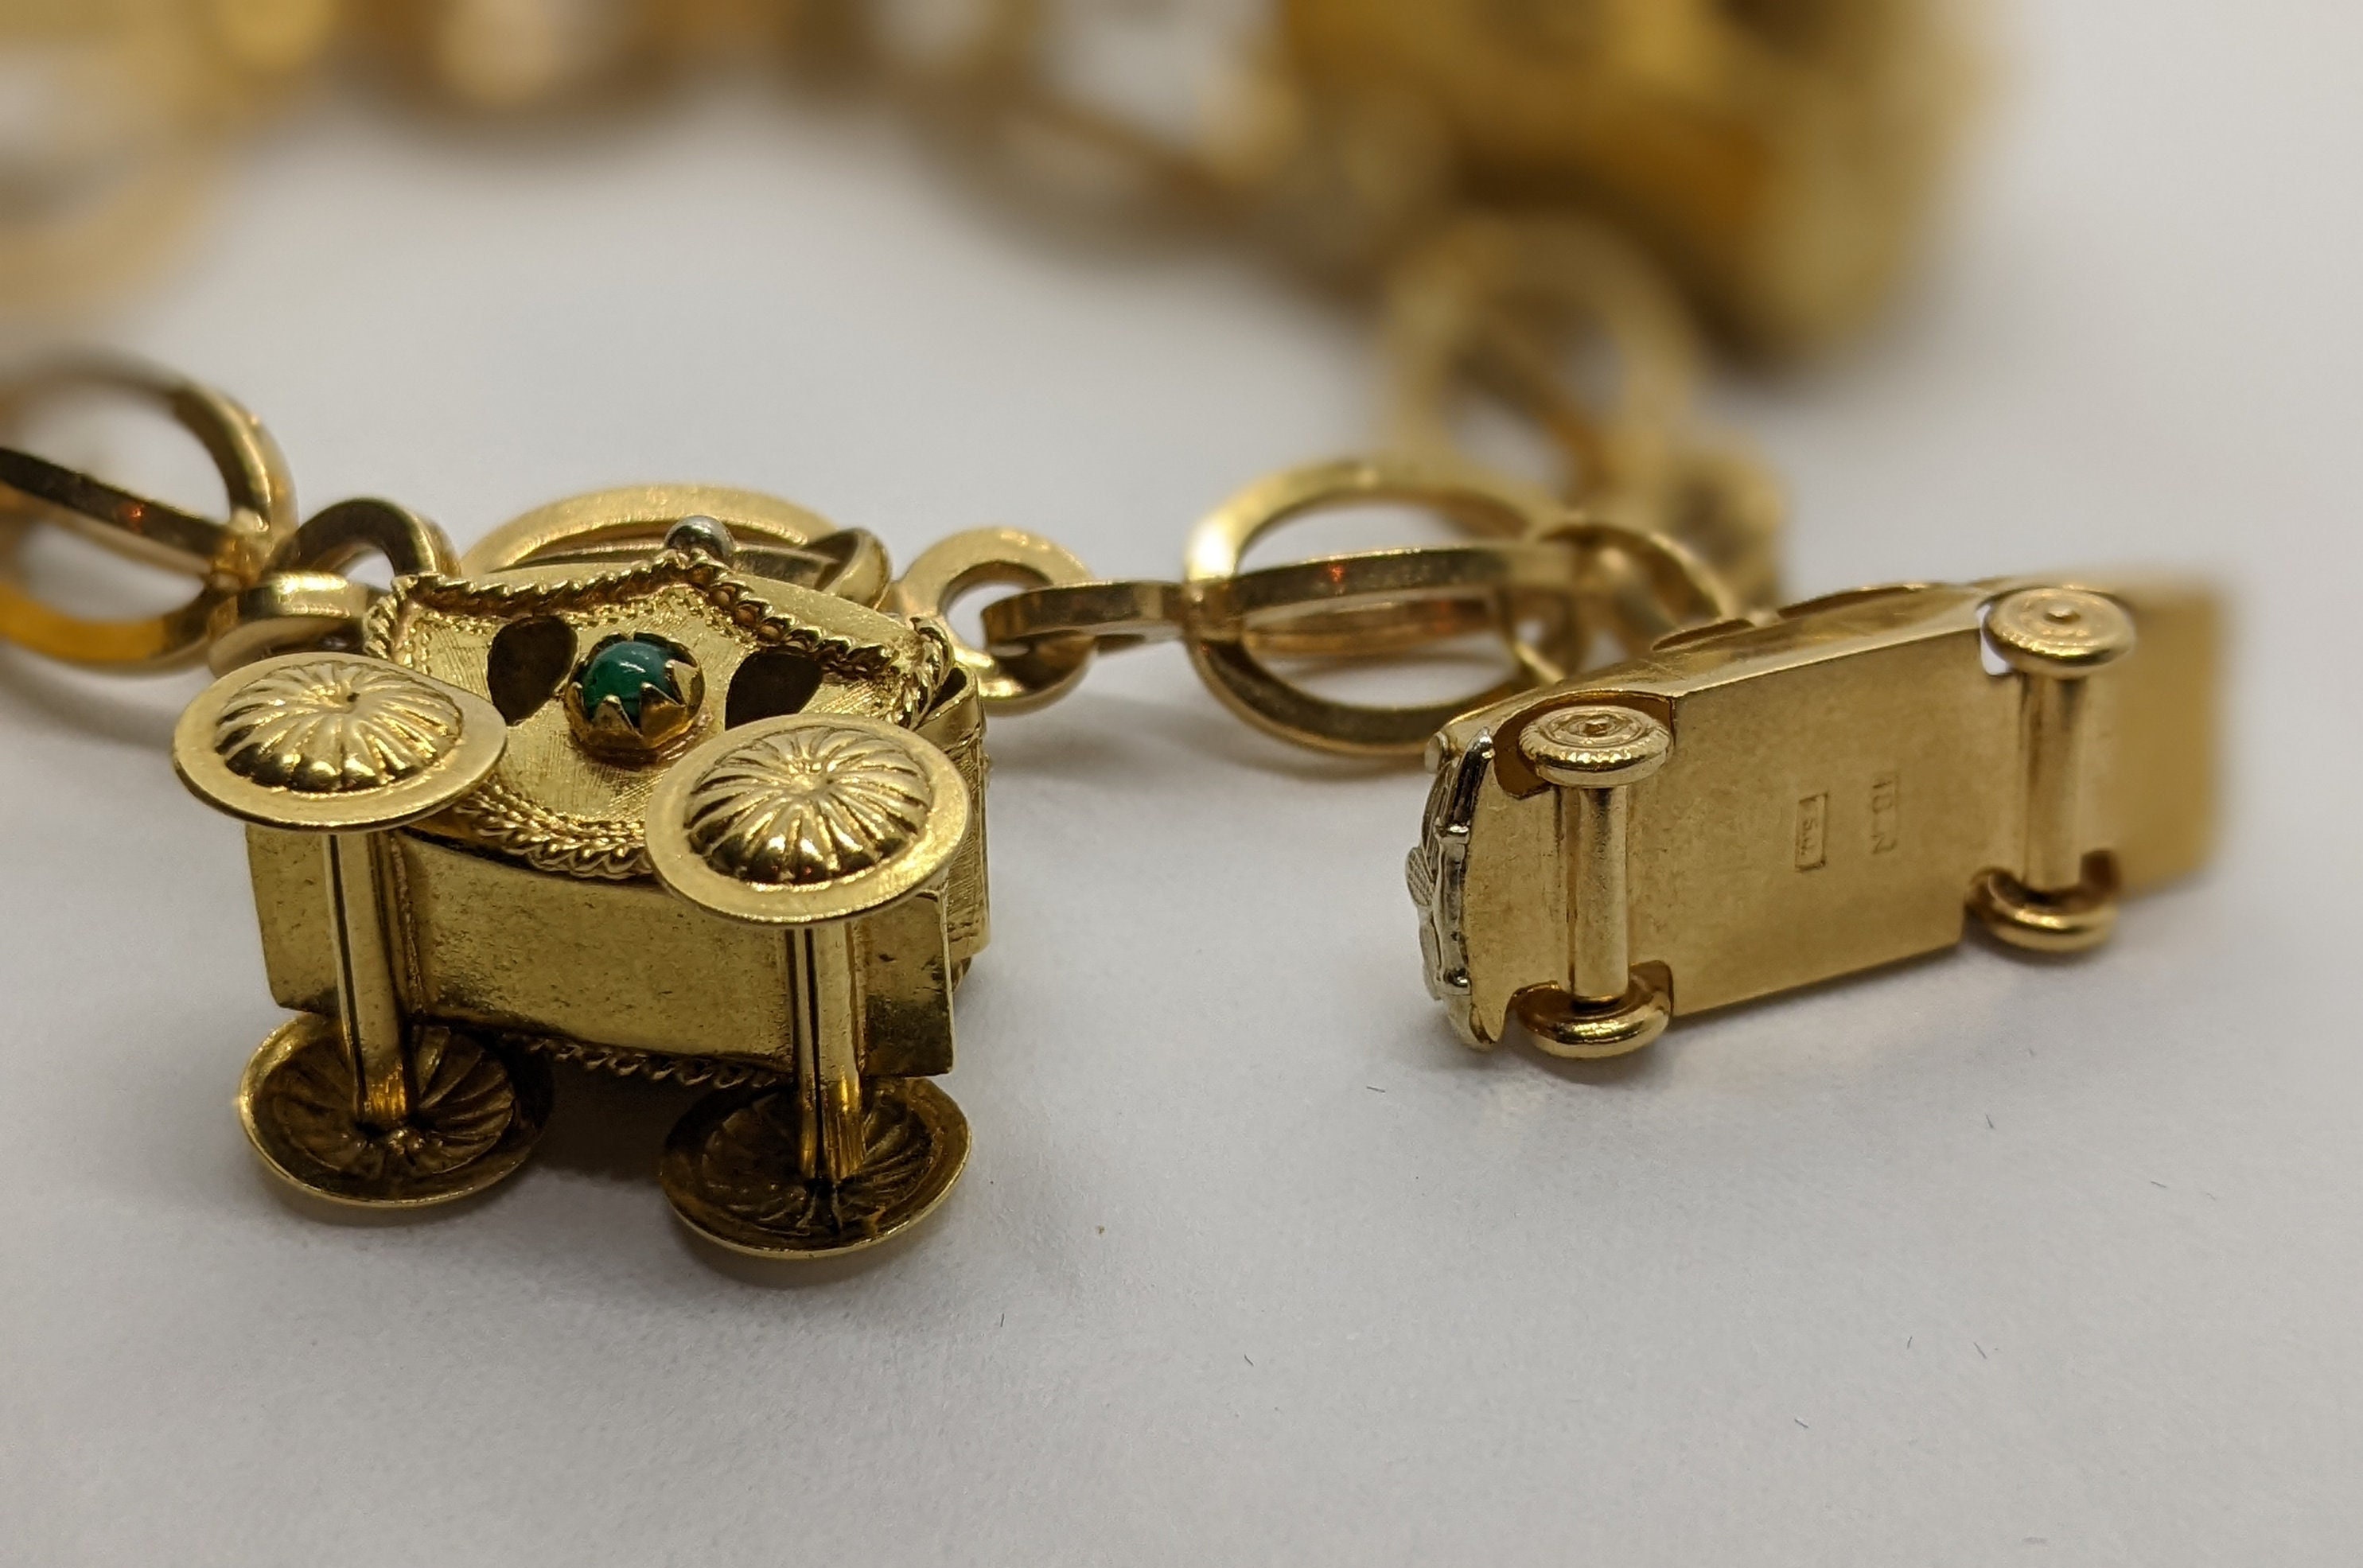 Unoaerre Vintage Italian Gold Charm Bracelet